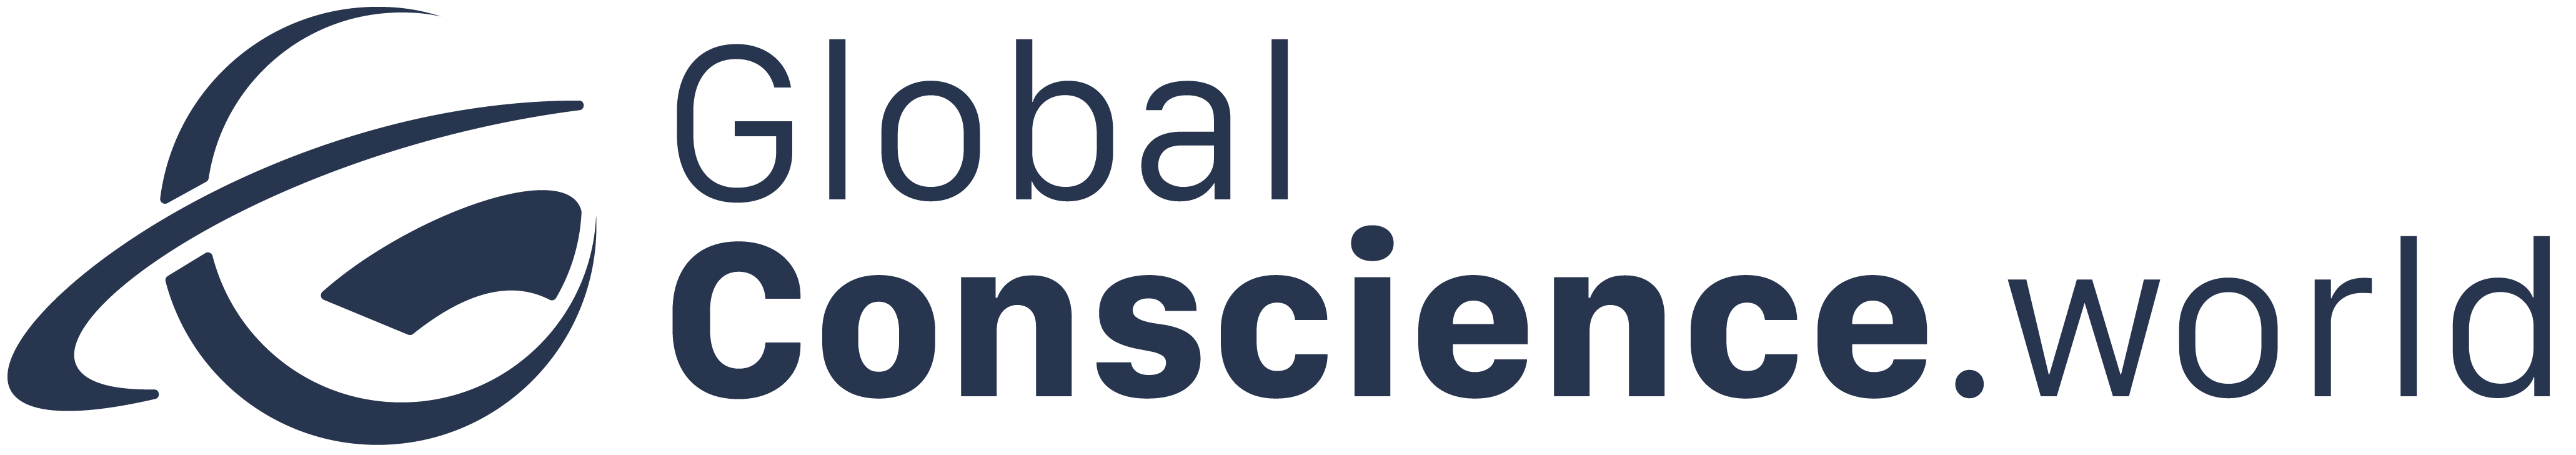 GlobalConscience.World Logo